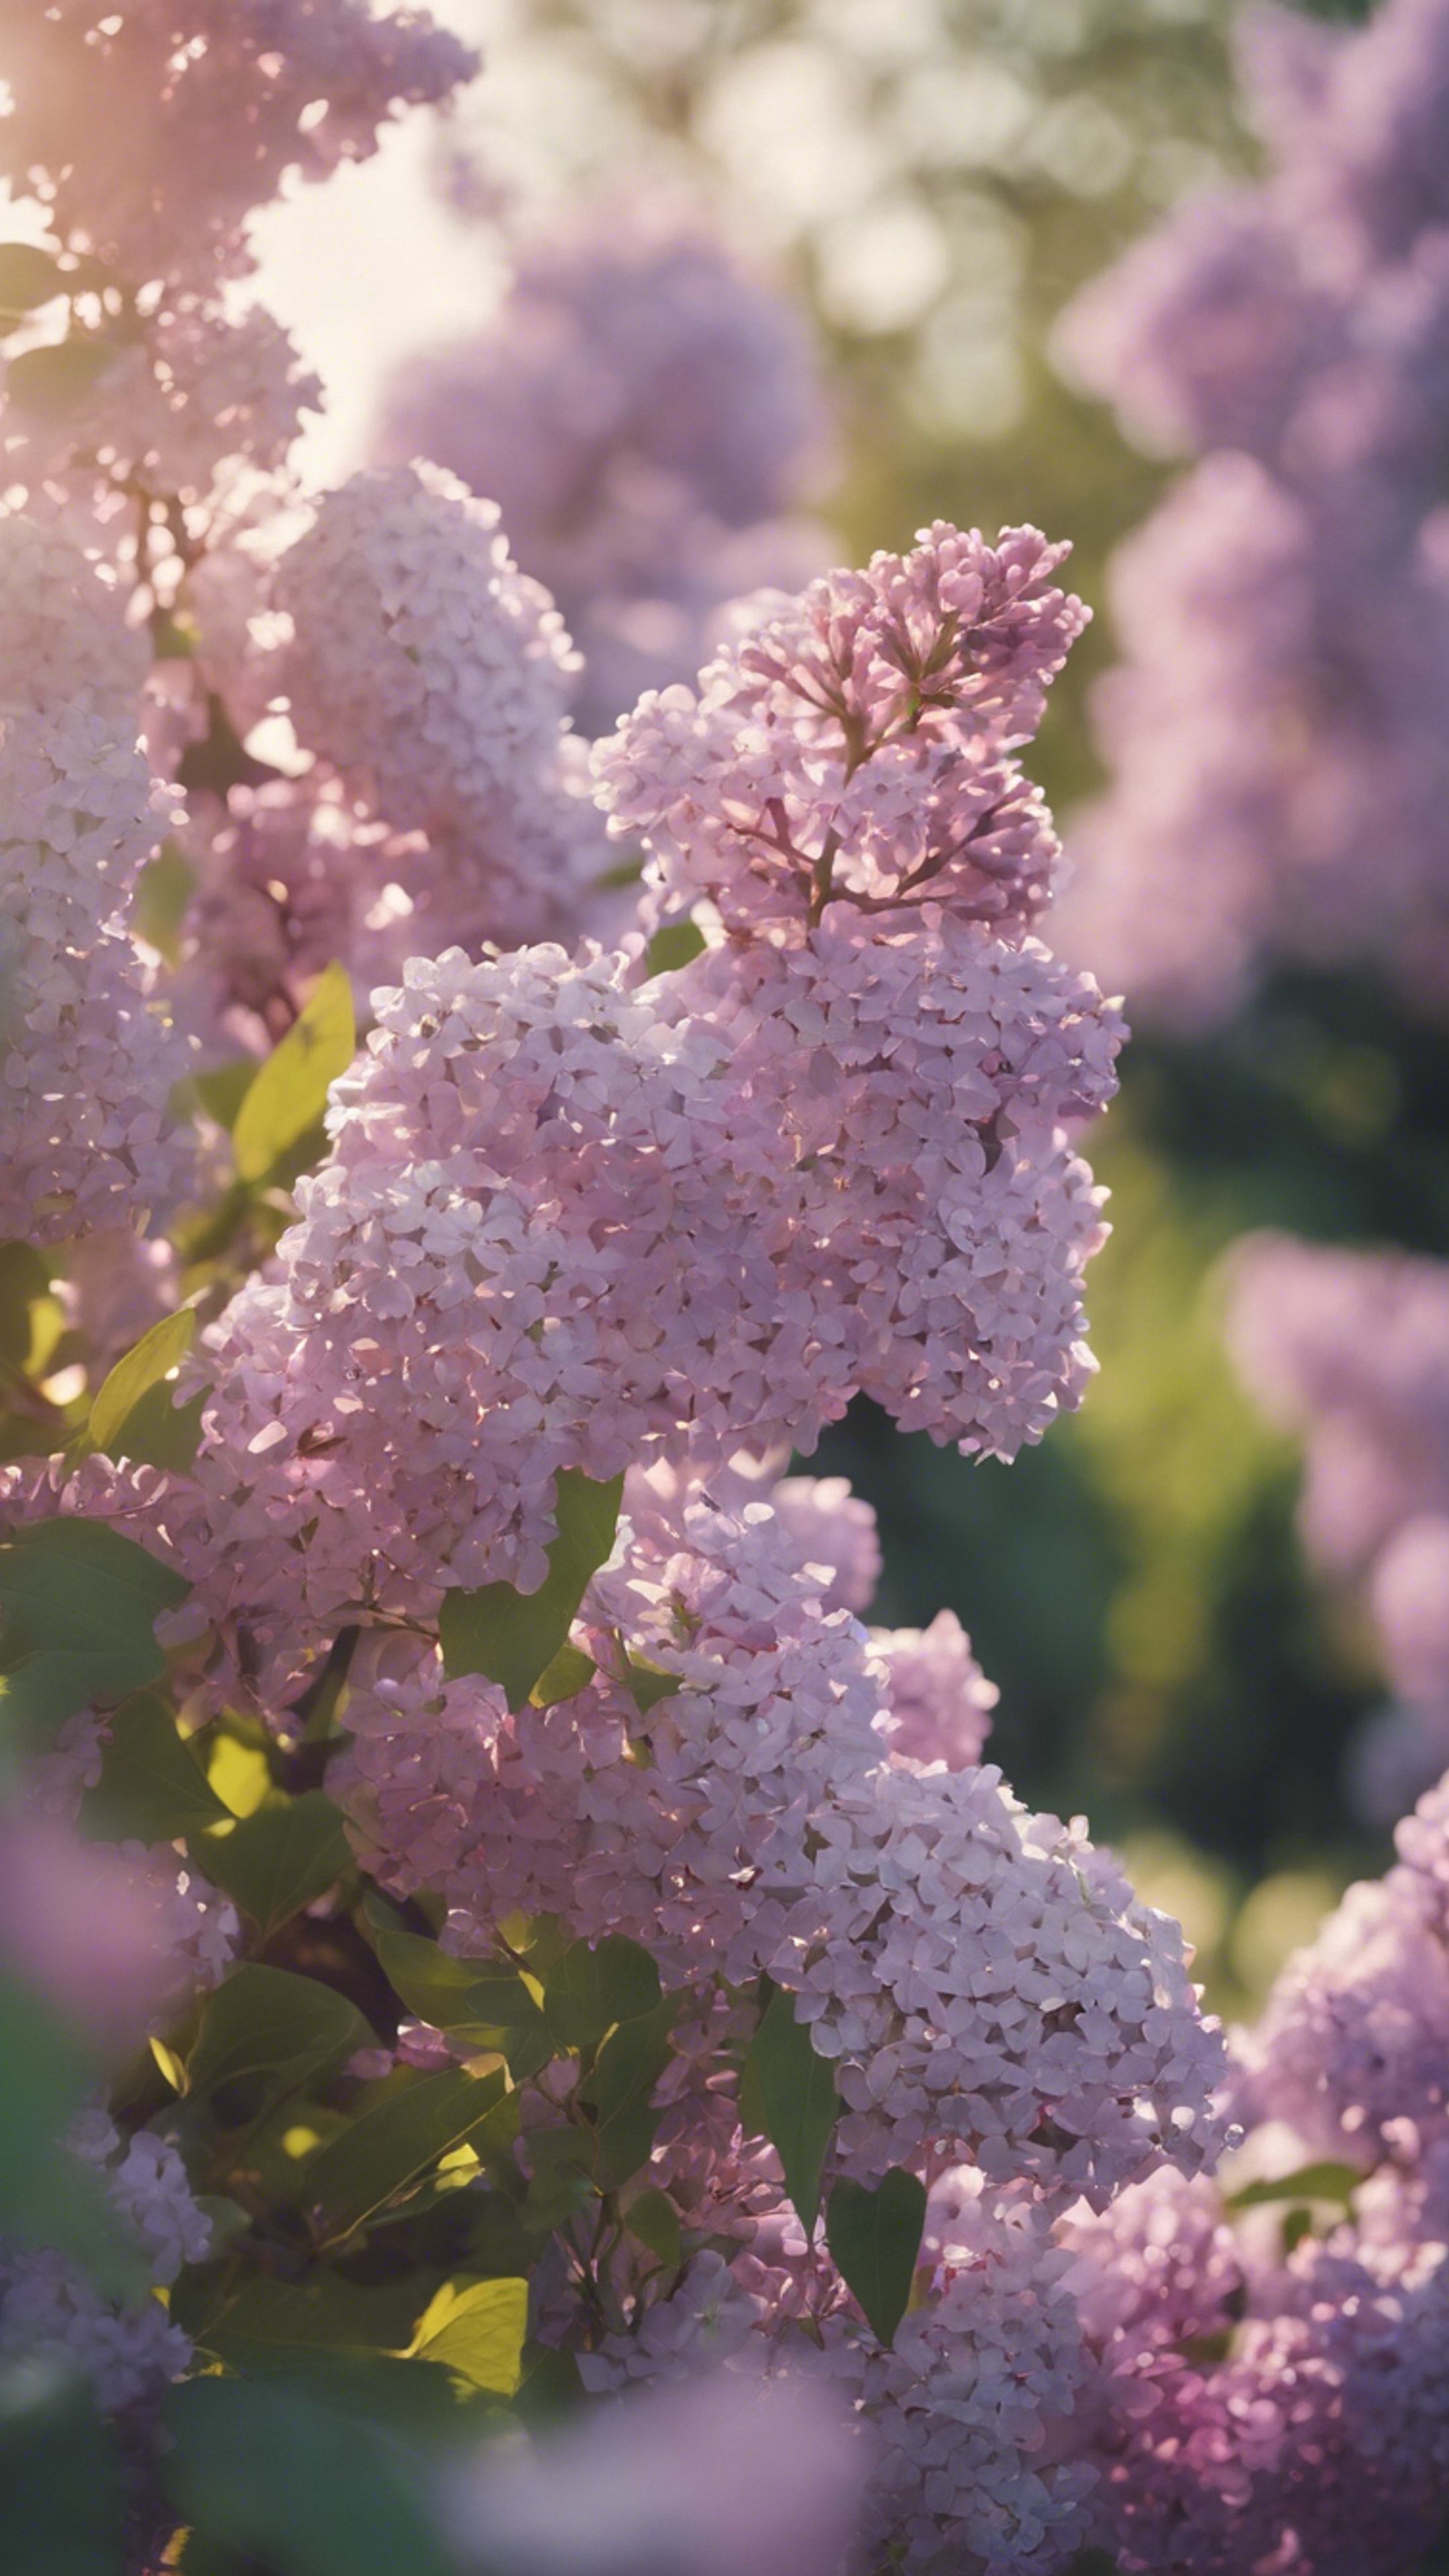 A bountiful garden full of preppy lilac flowers in full bloom under soft sunlight. Wallpaper[535239431e6946dc9128]